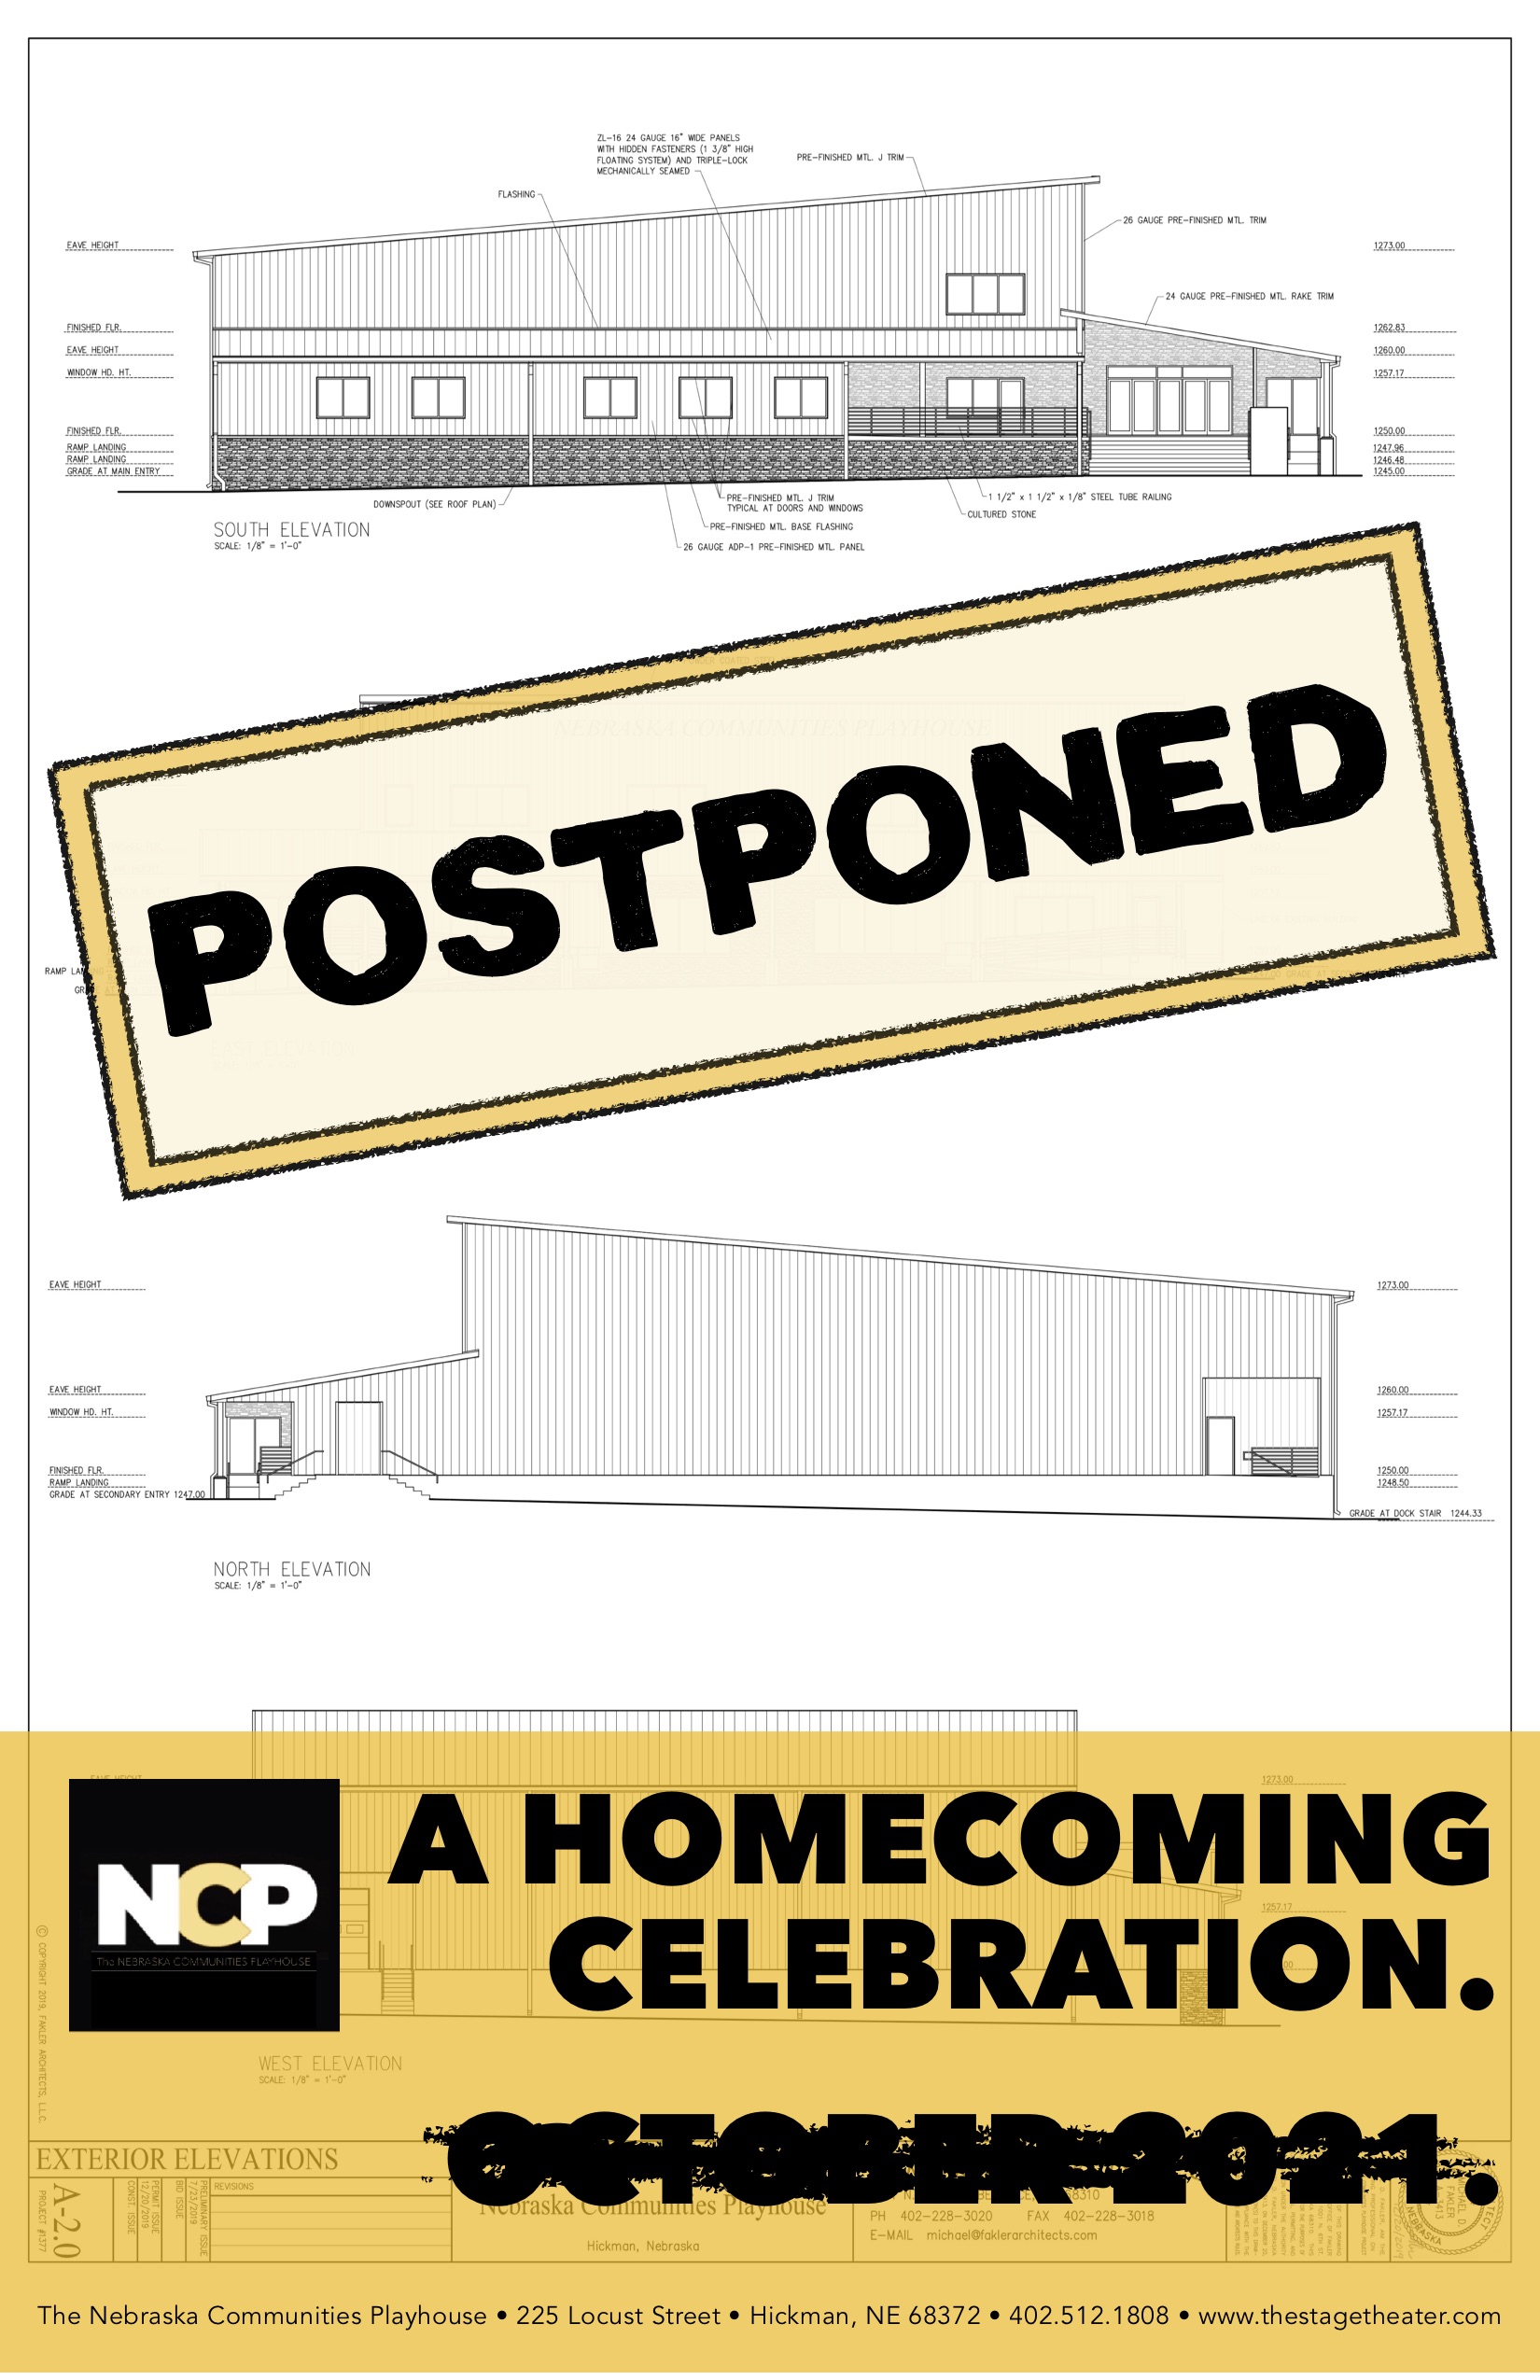 NCP_Homecoming_POSTPONED